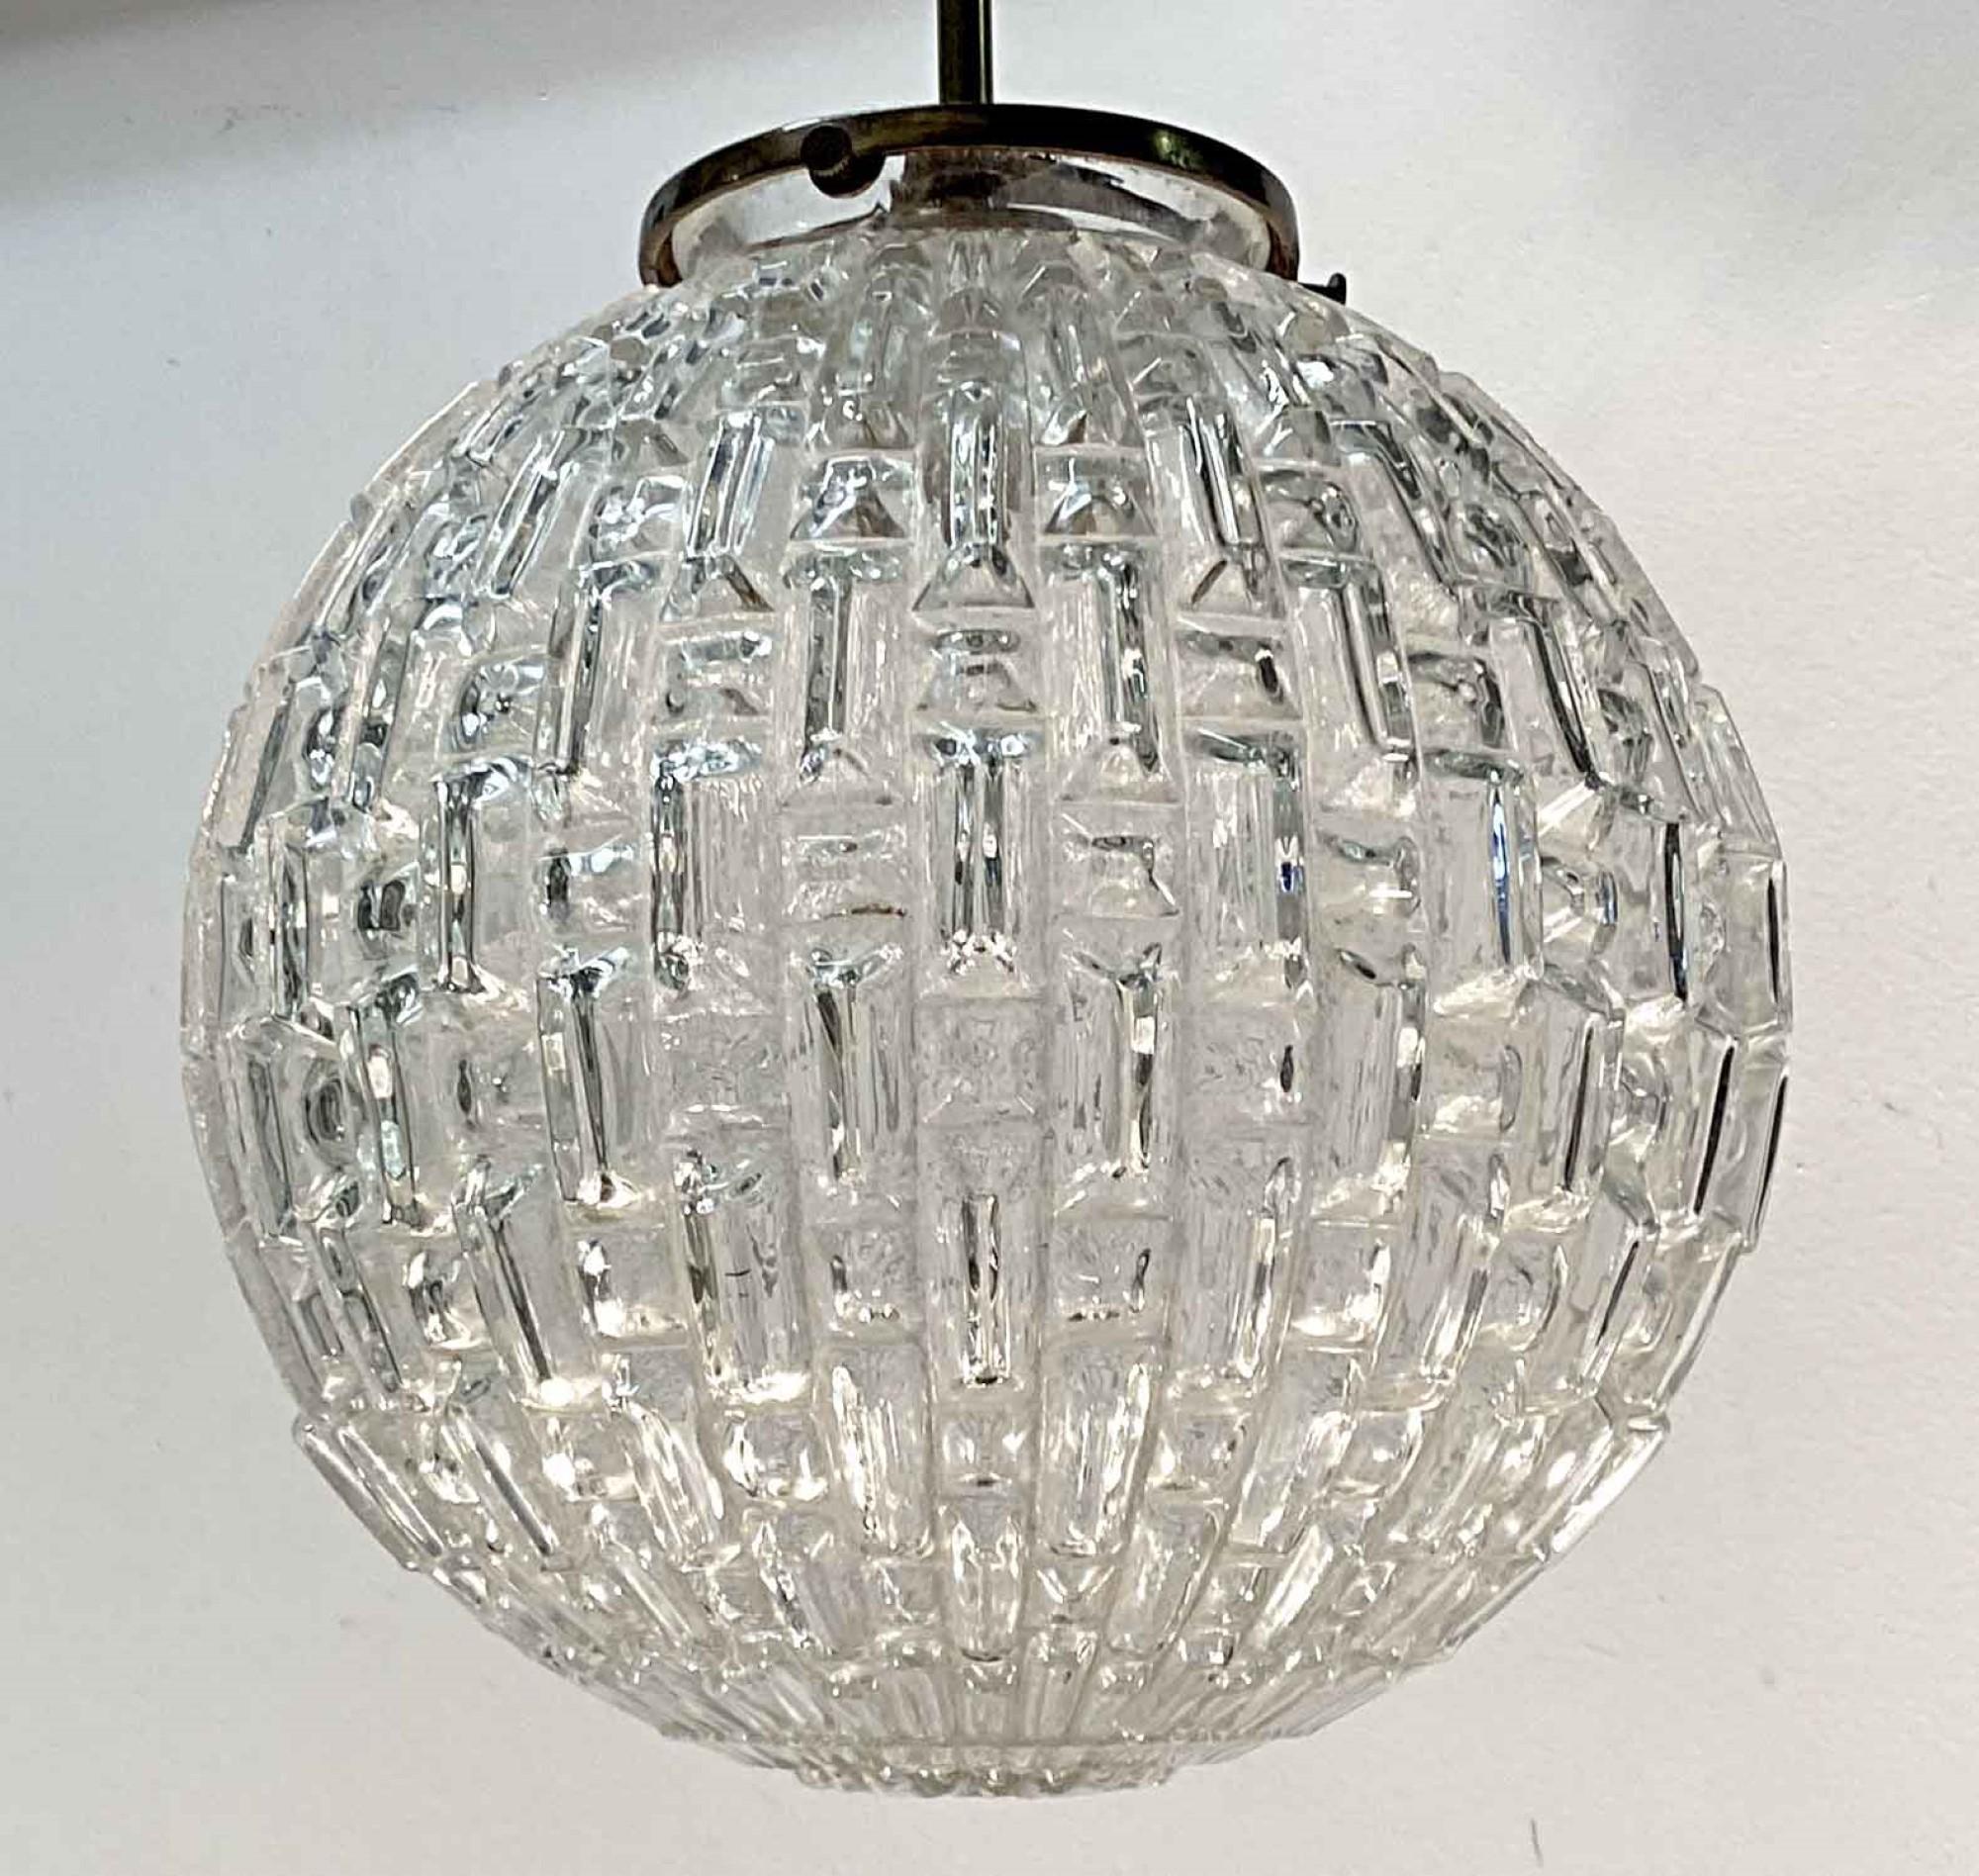 Late 20th Century 1990s Mid-Century Modern Textured Globe Pendant Light with Brass Hardware